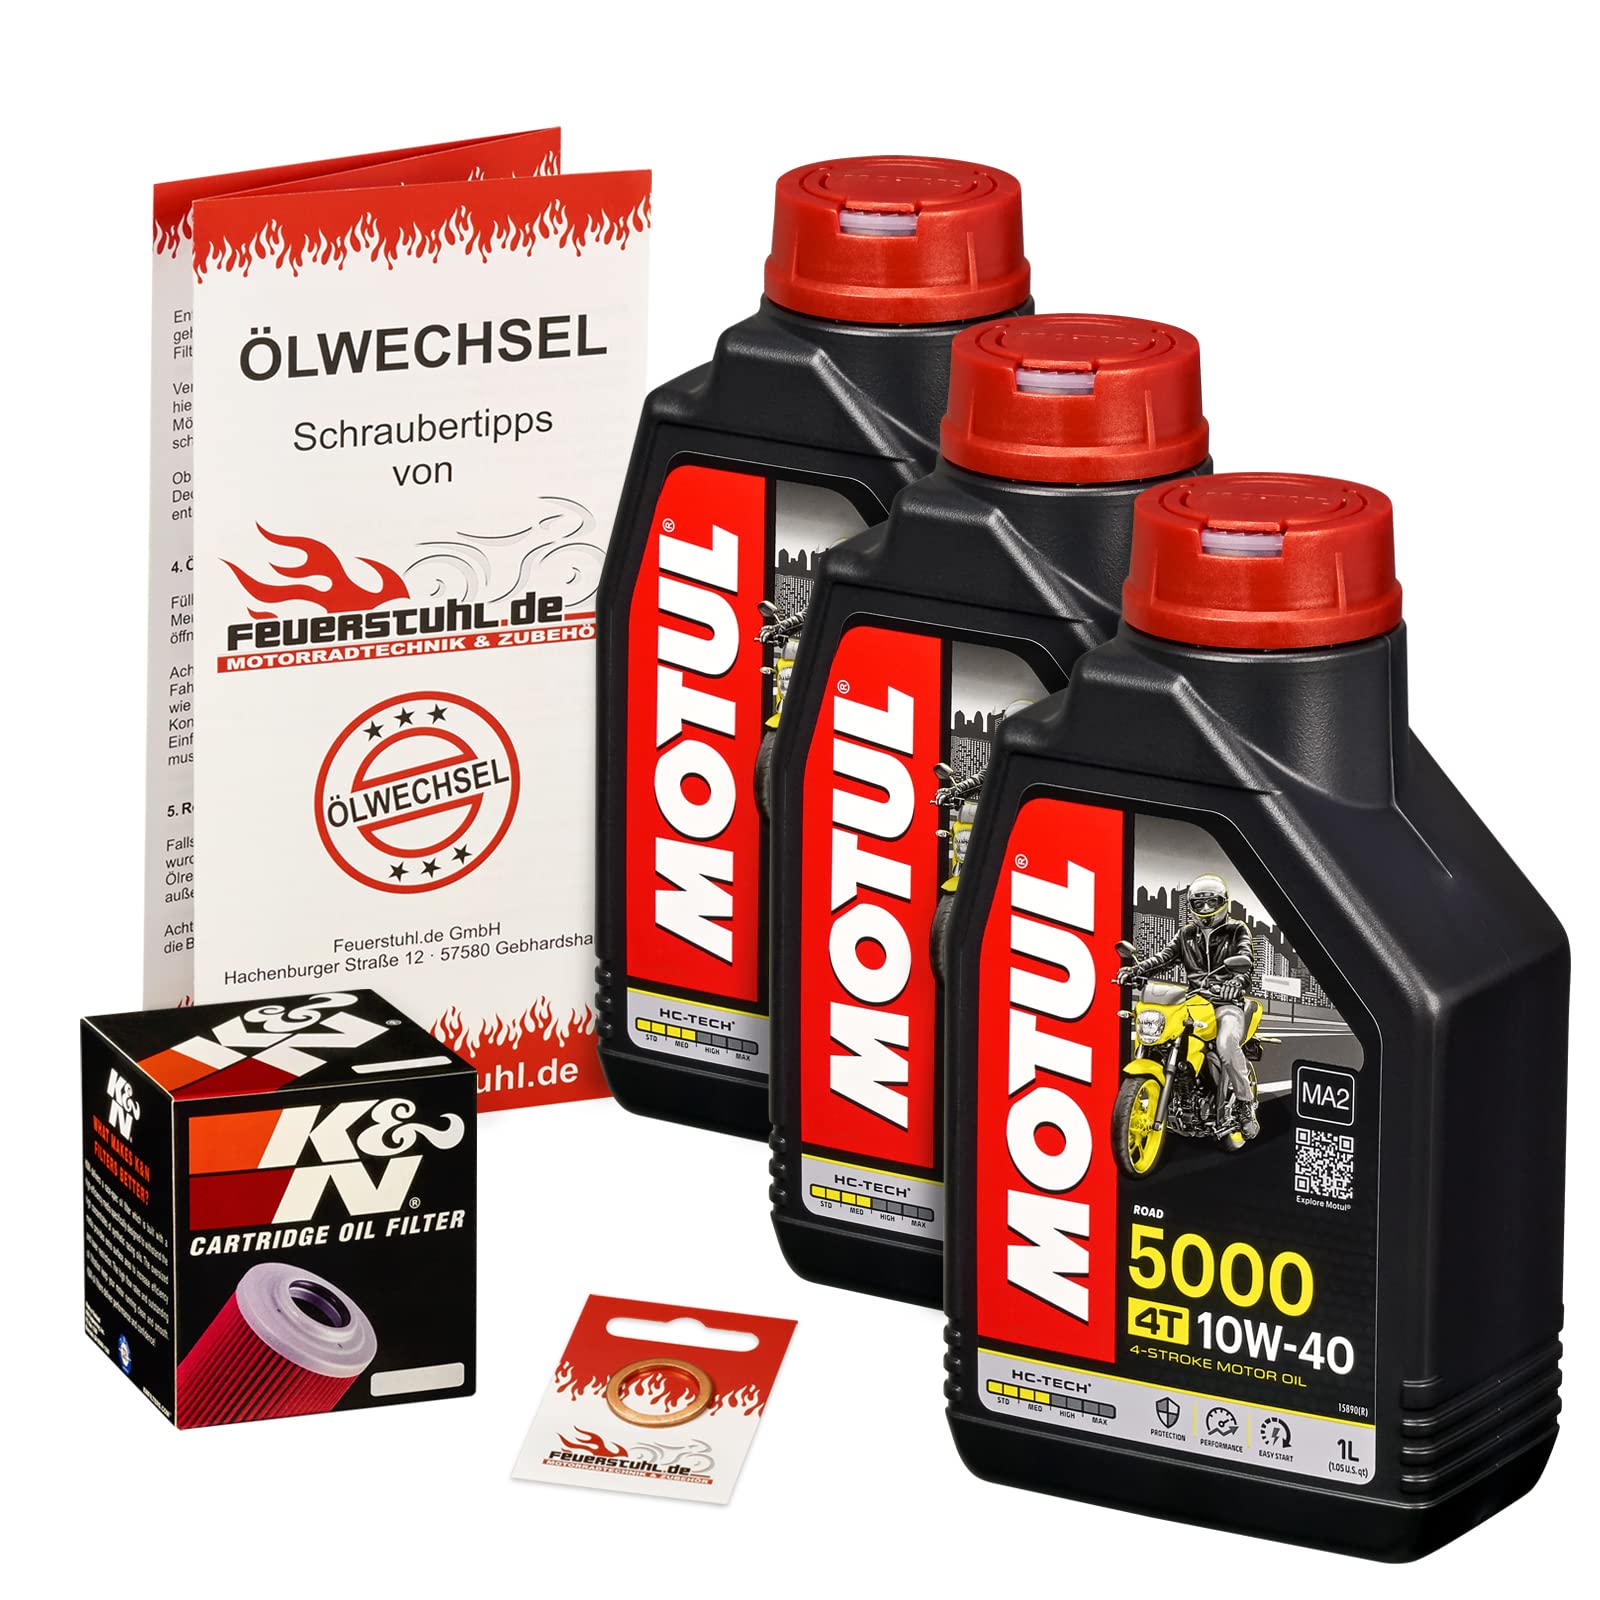 Motul 10W-40 Öl + K&N Ölfilter für Yamaha SR 500, 78-99, 2J4 48T - Ölwechselset inkl. Motoröl, Filter, Dichtring von Feuerstuhl.de GmbH